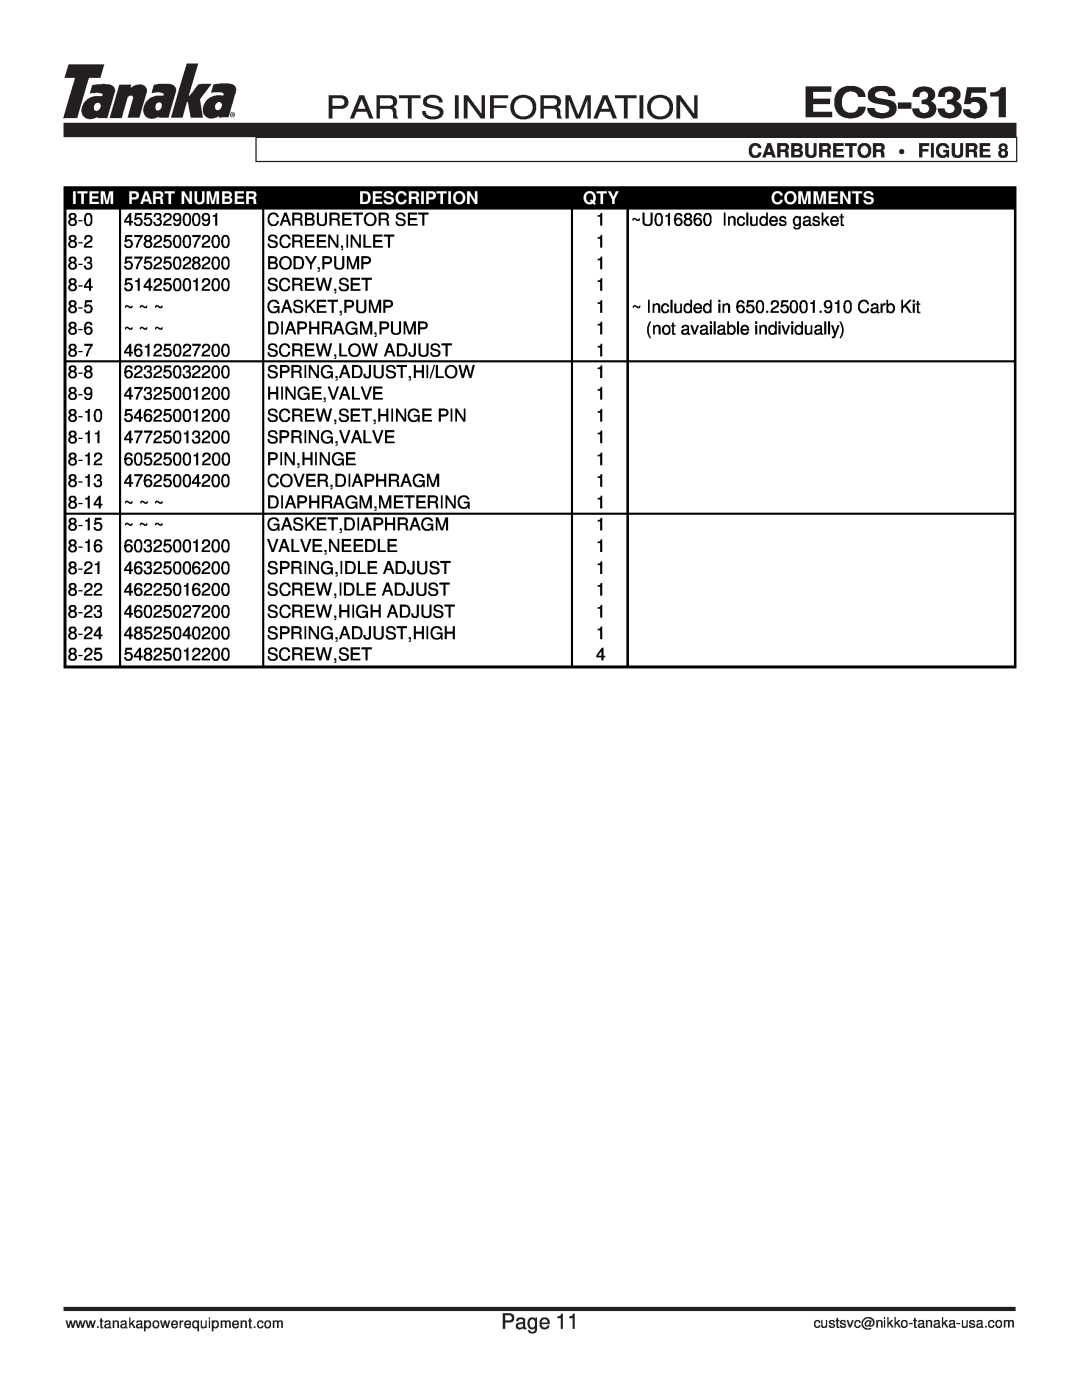 Tanaka ECS-3351/B manual Parts Information, Carburetor Figure, Page, Part Number, Description, Comments 